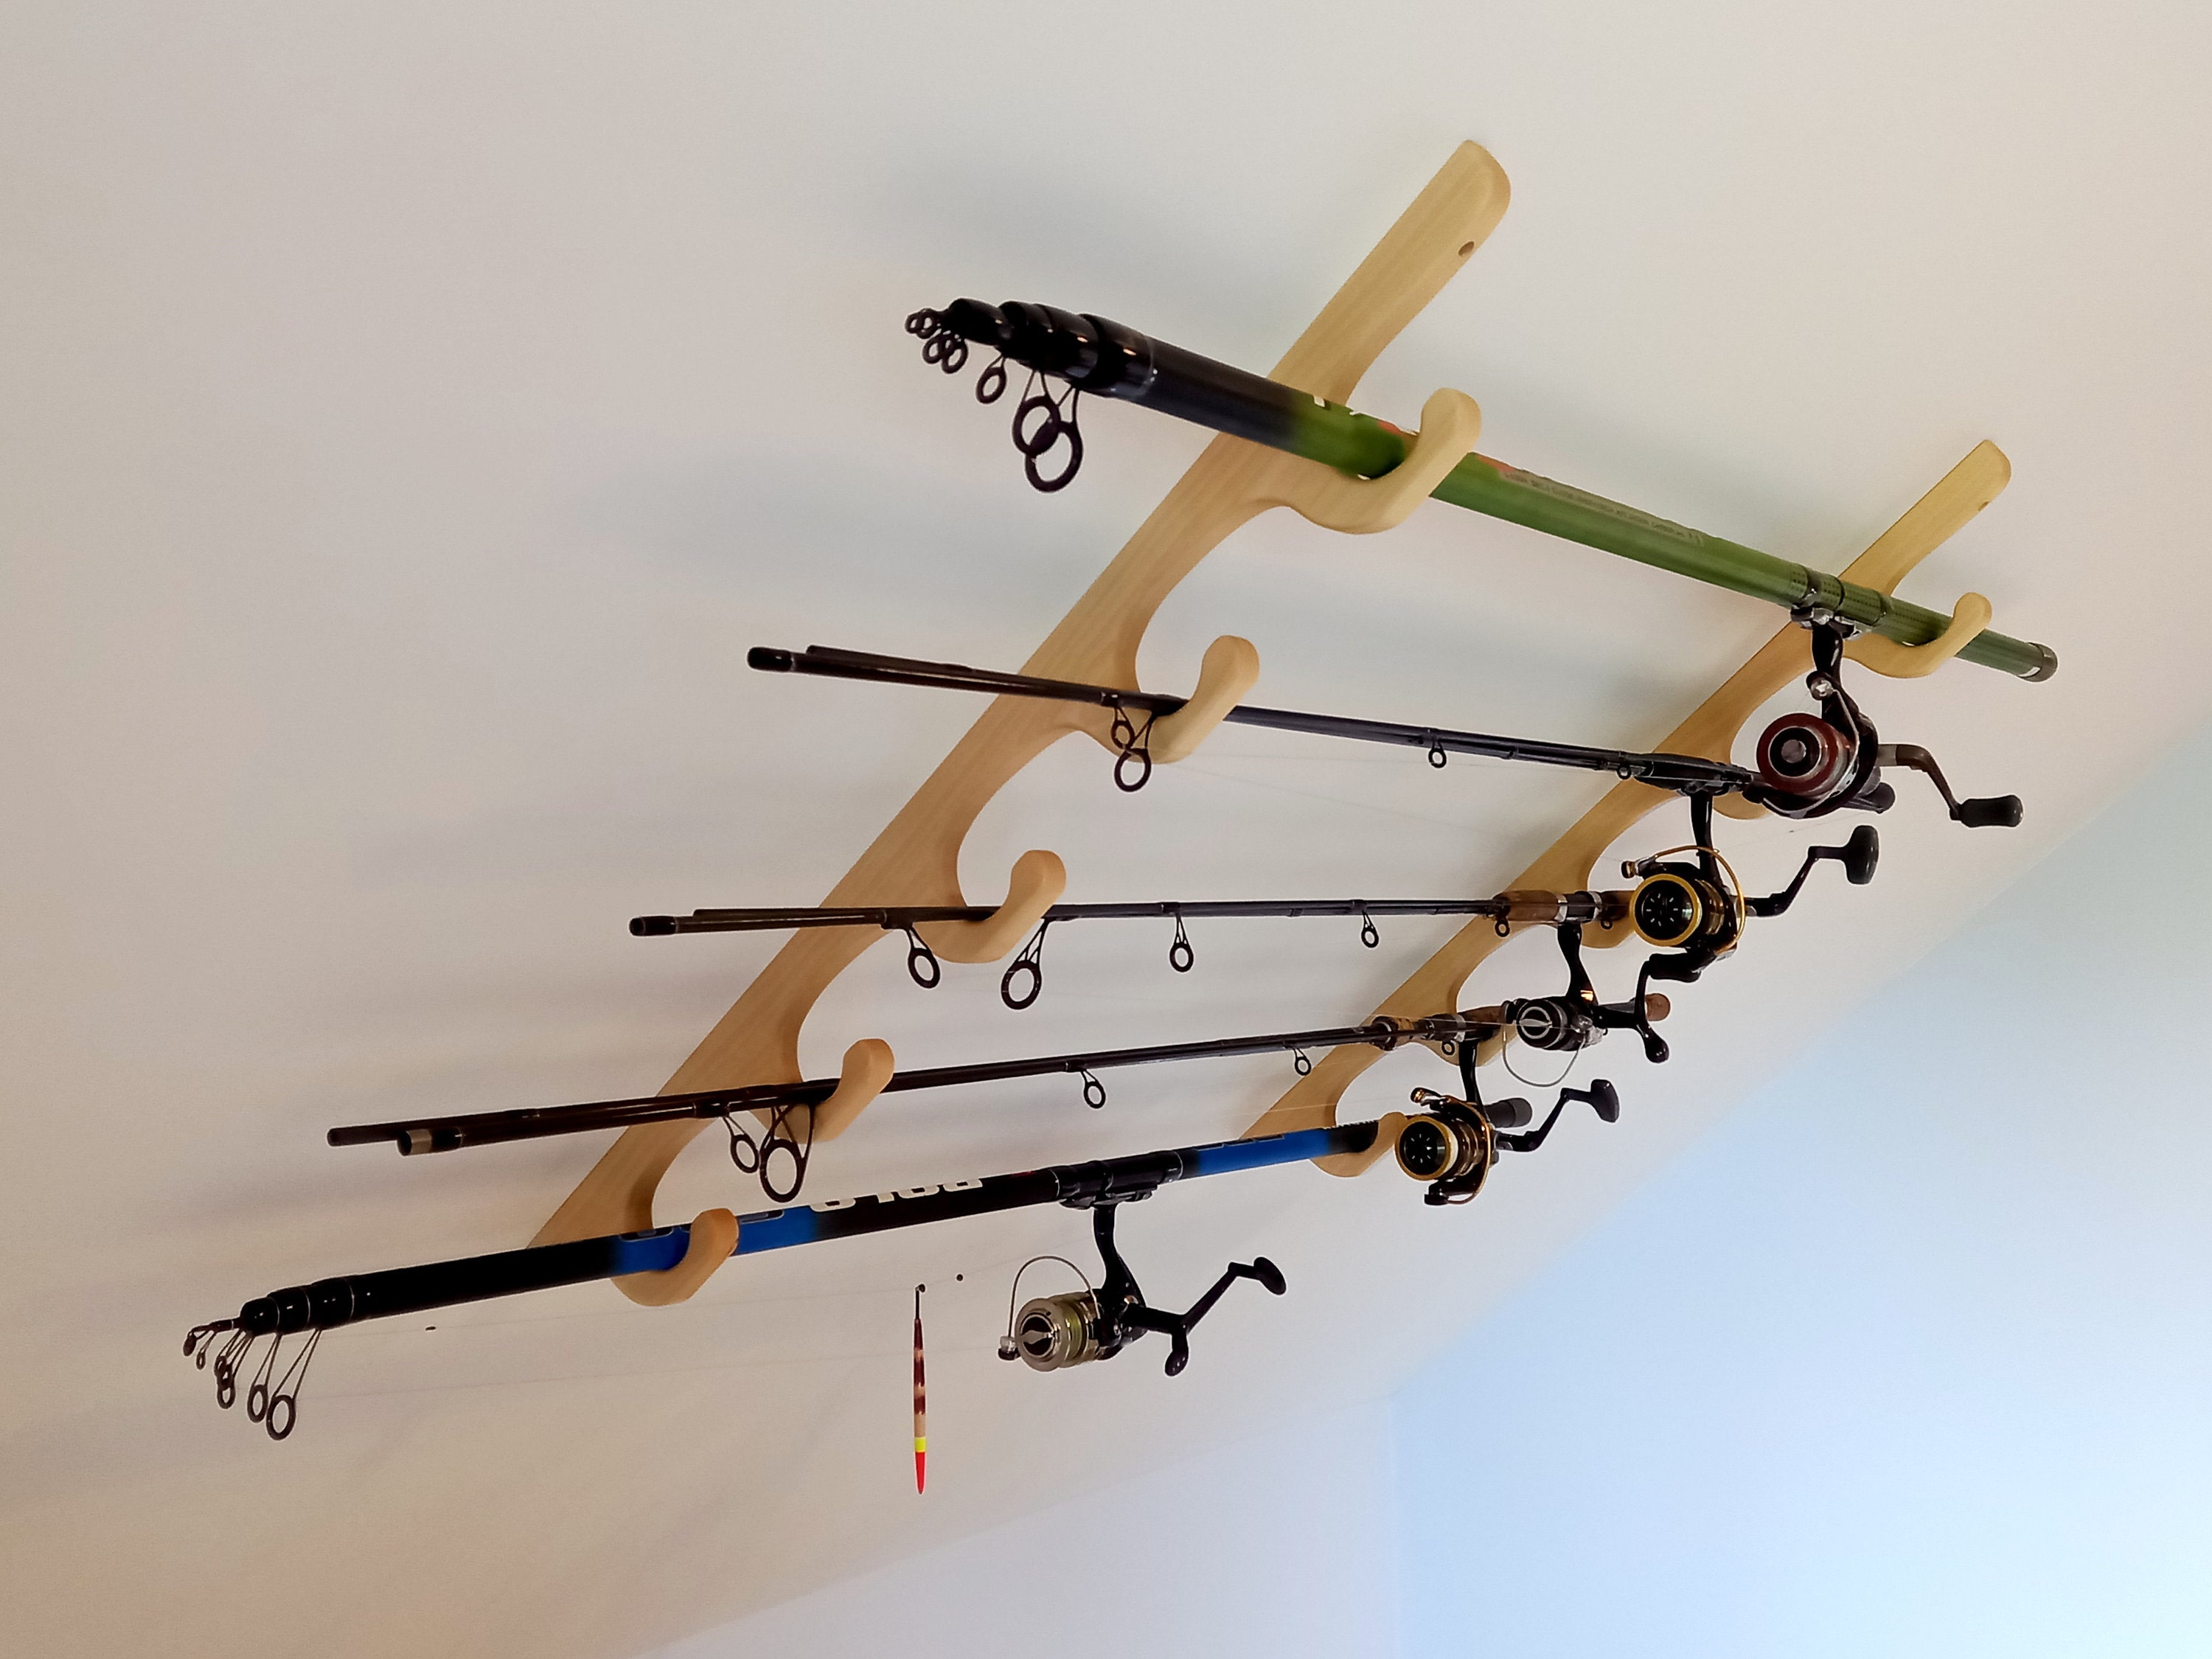 Fishing Rod Rack / Universal Mounting / Solid Walnut Wood 